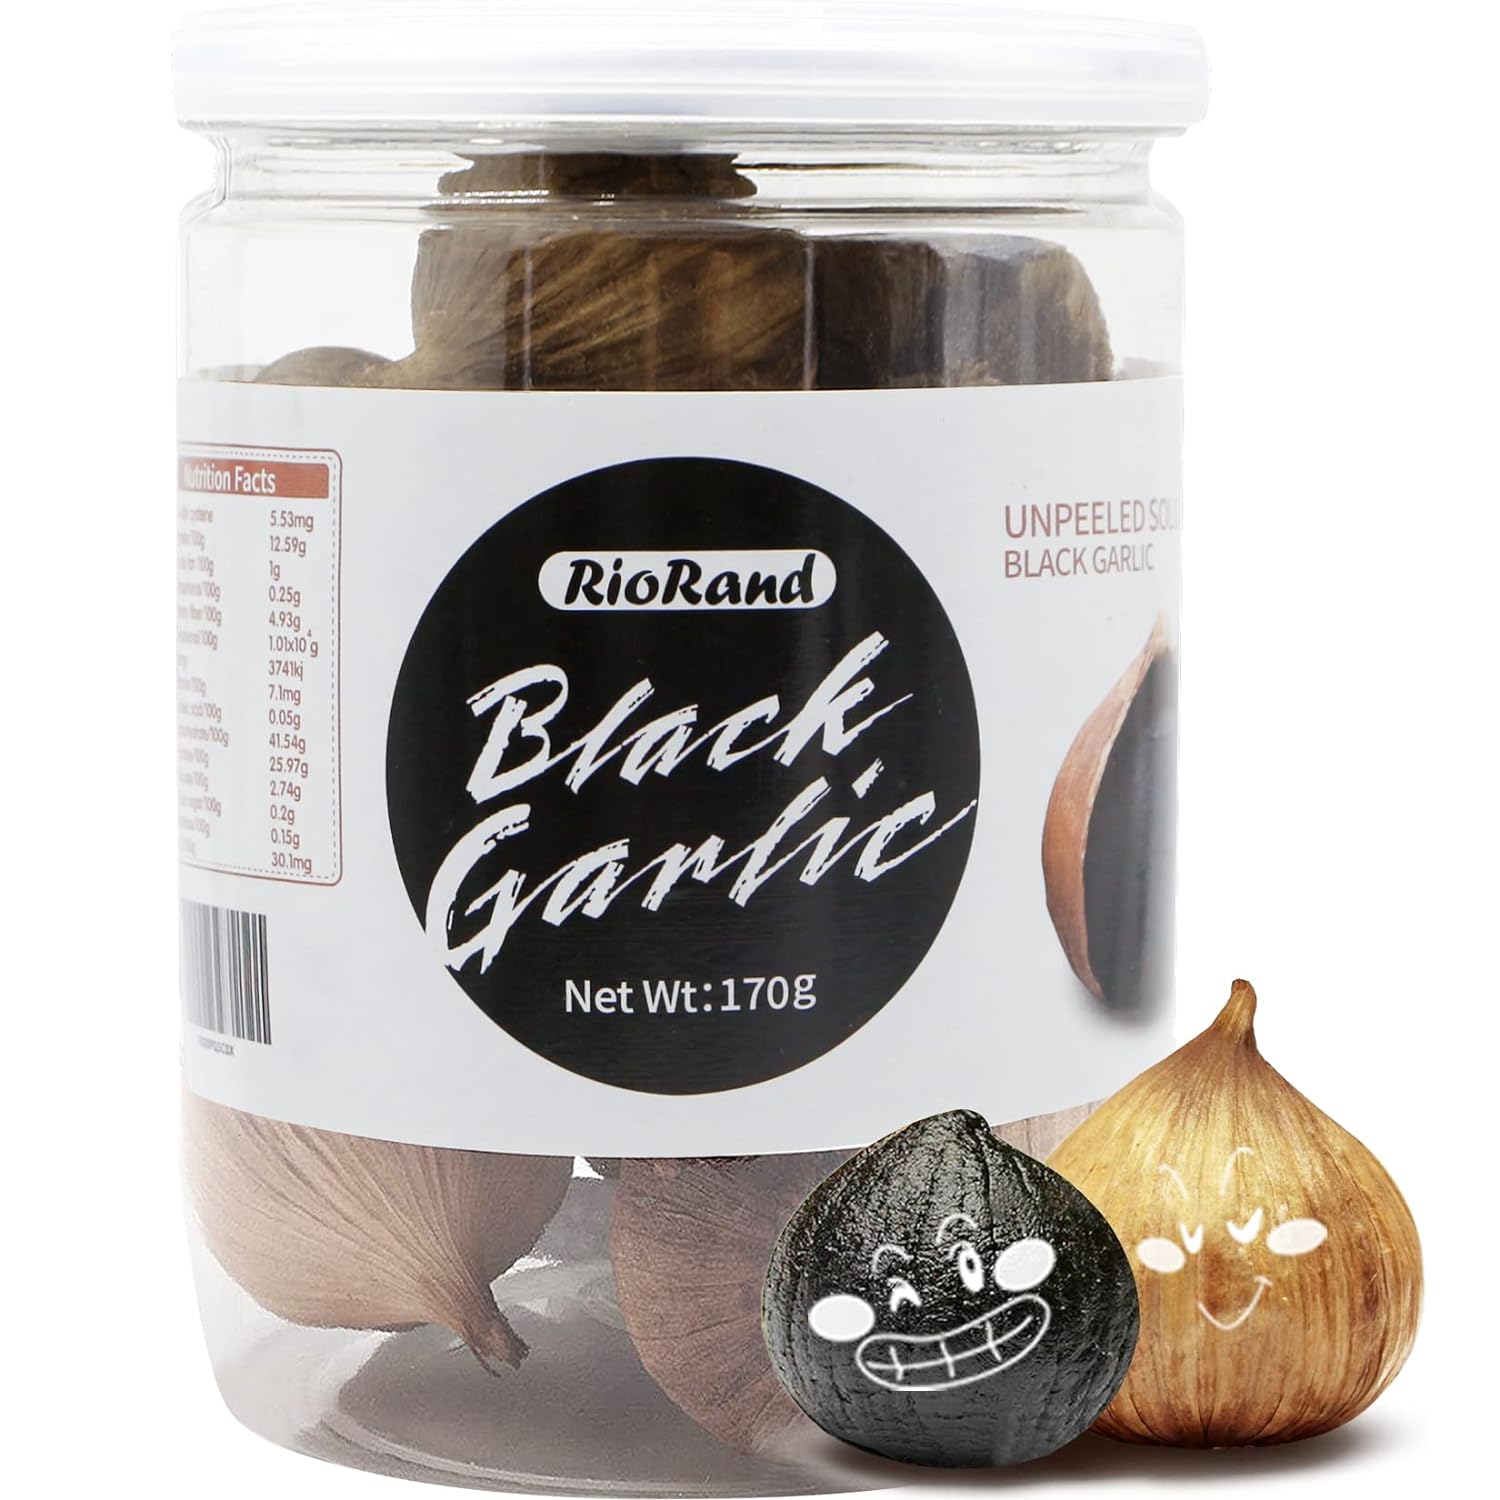 Black Garlic 170g Whole Black Garlic Aged for Full 90 Days Black Garlic Jar 0.37 Pounds